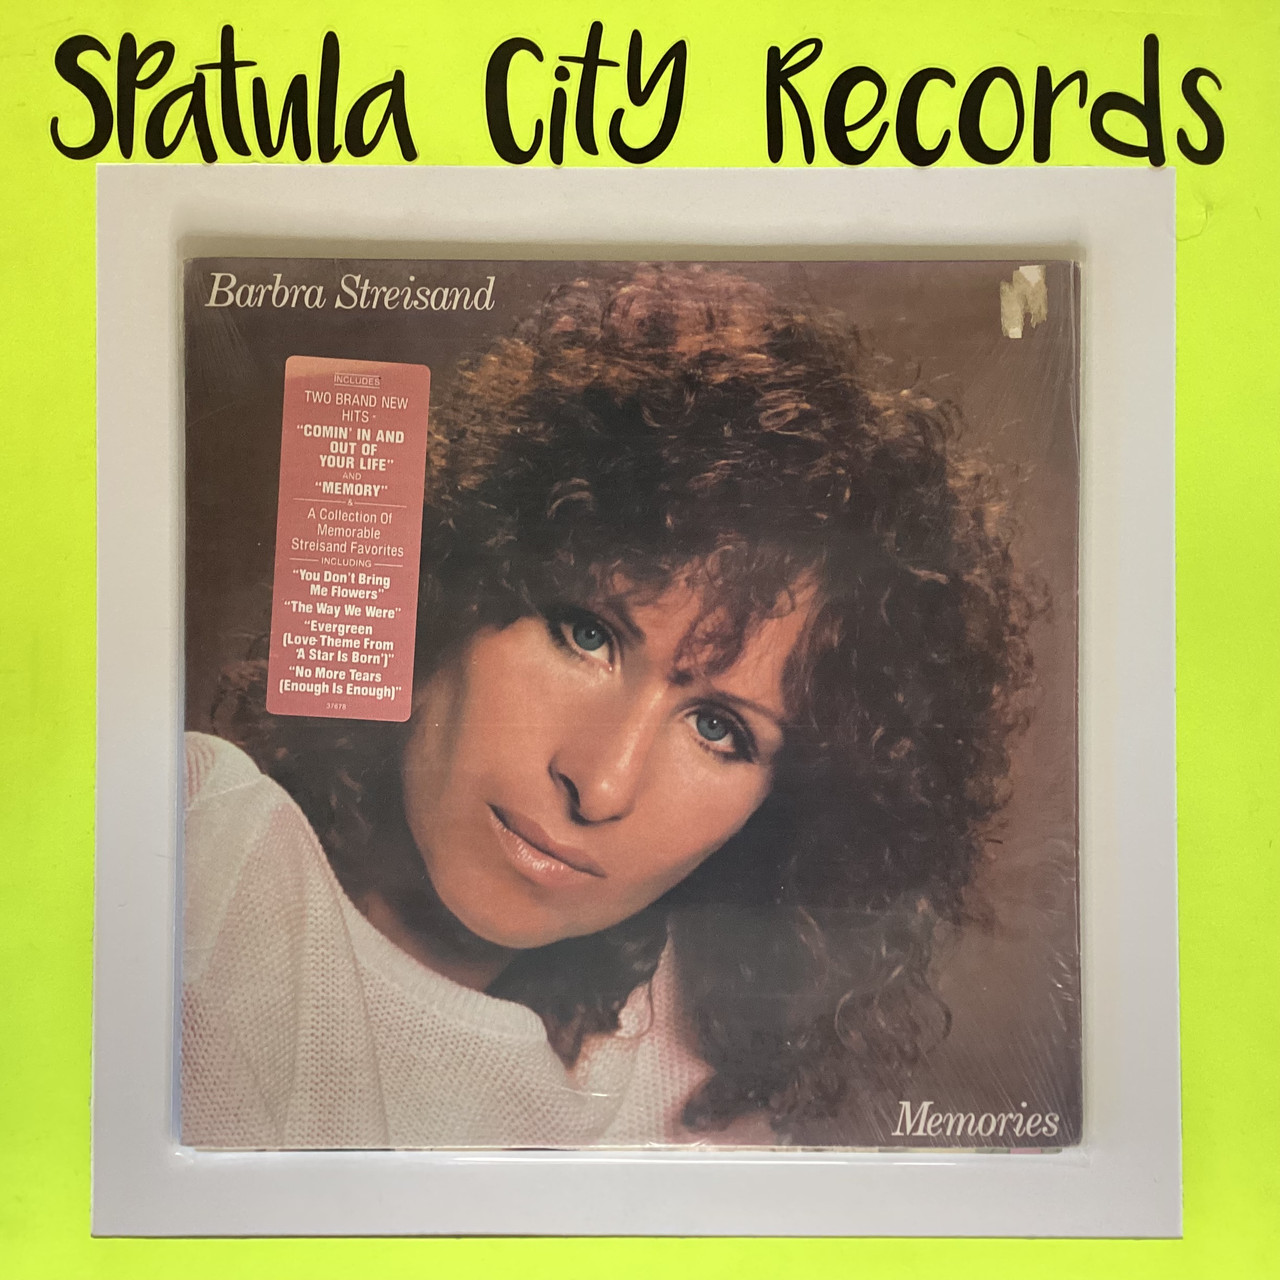 Barbra Streisand - Memories - vinyl record album LP